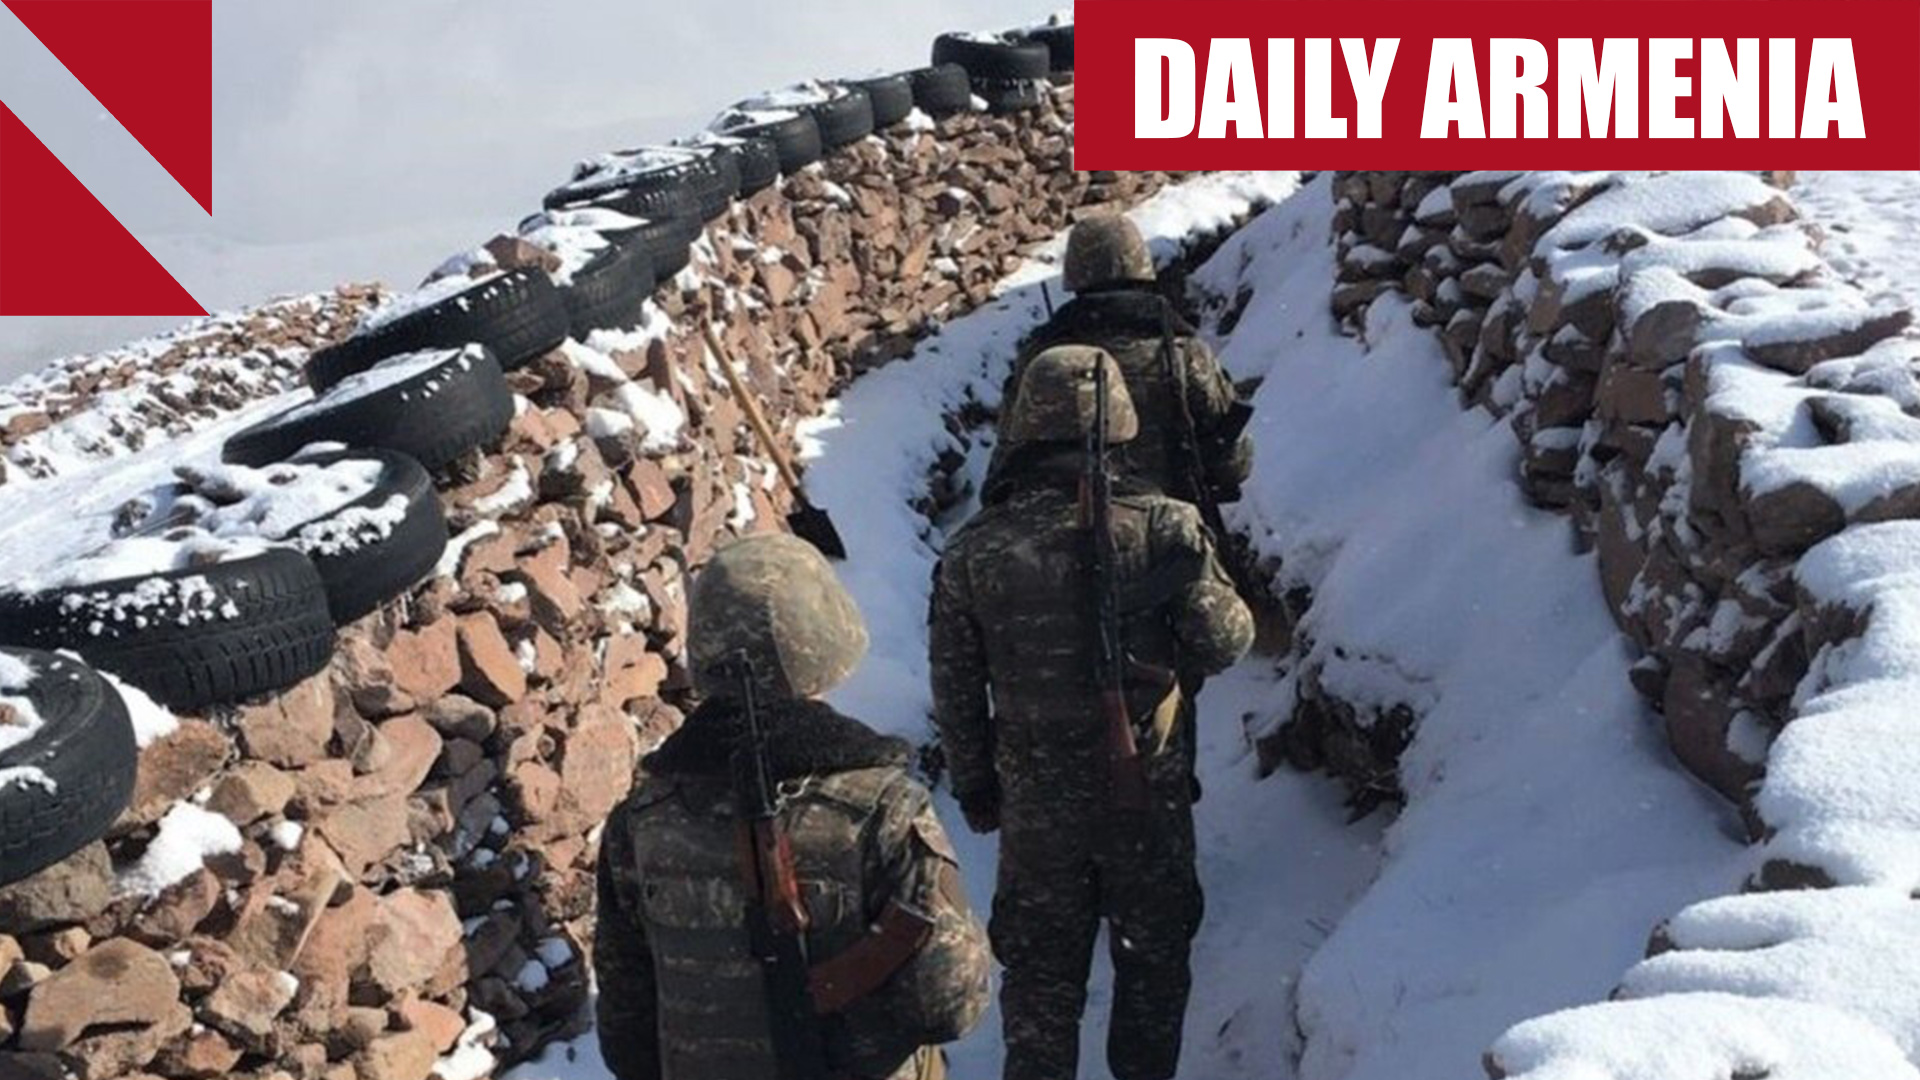 Azerbaijan kills 4, wounds 1 in major border escalation